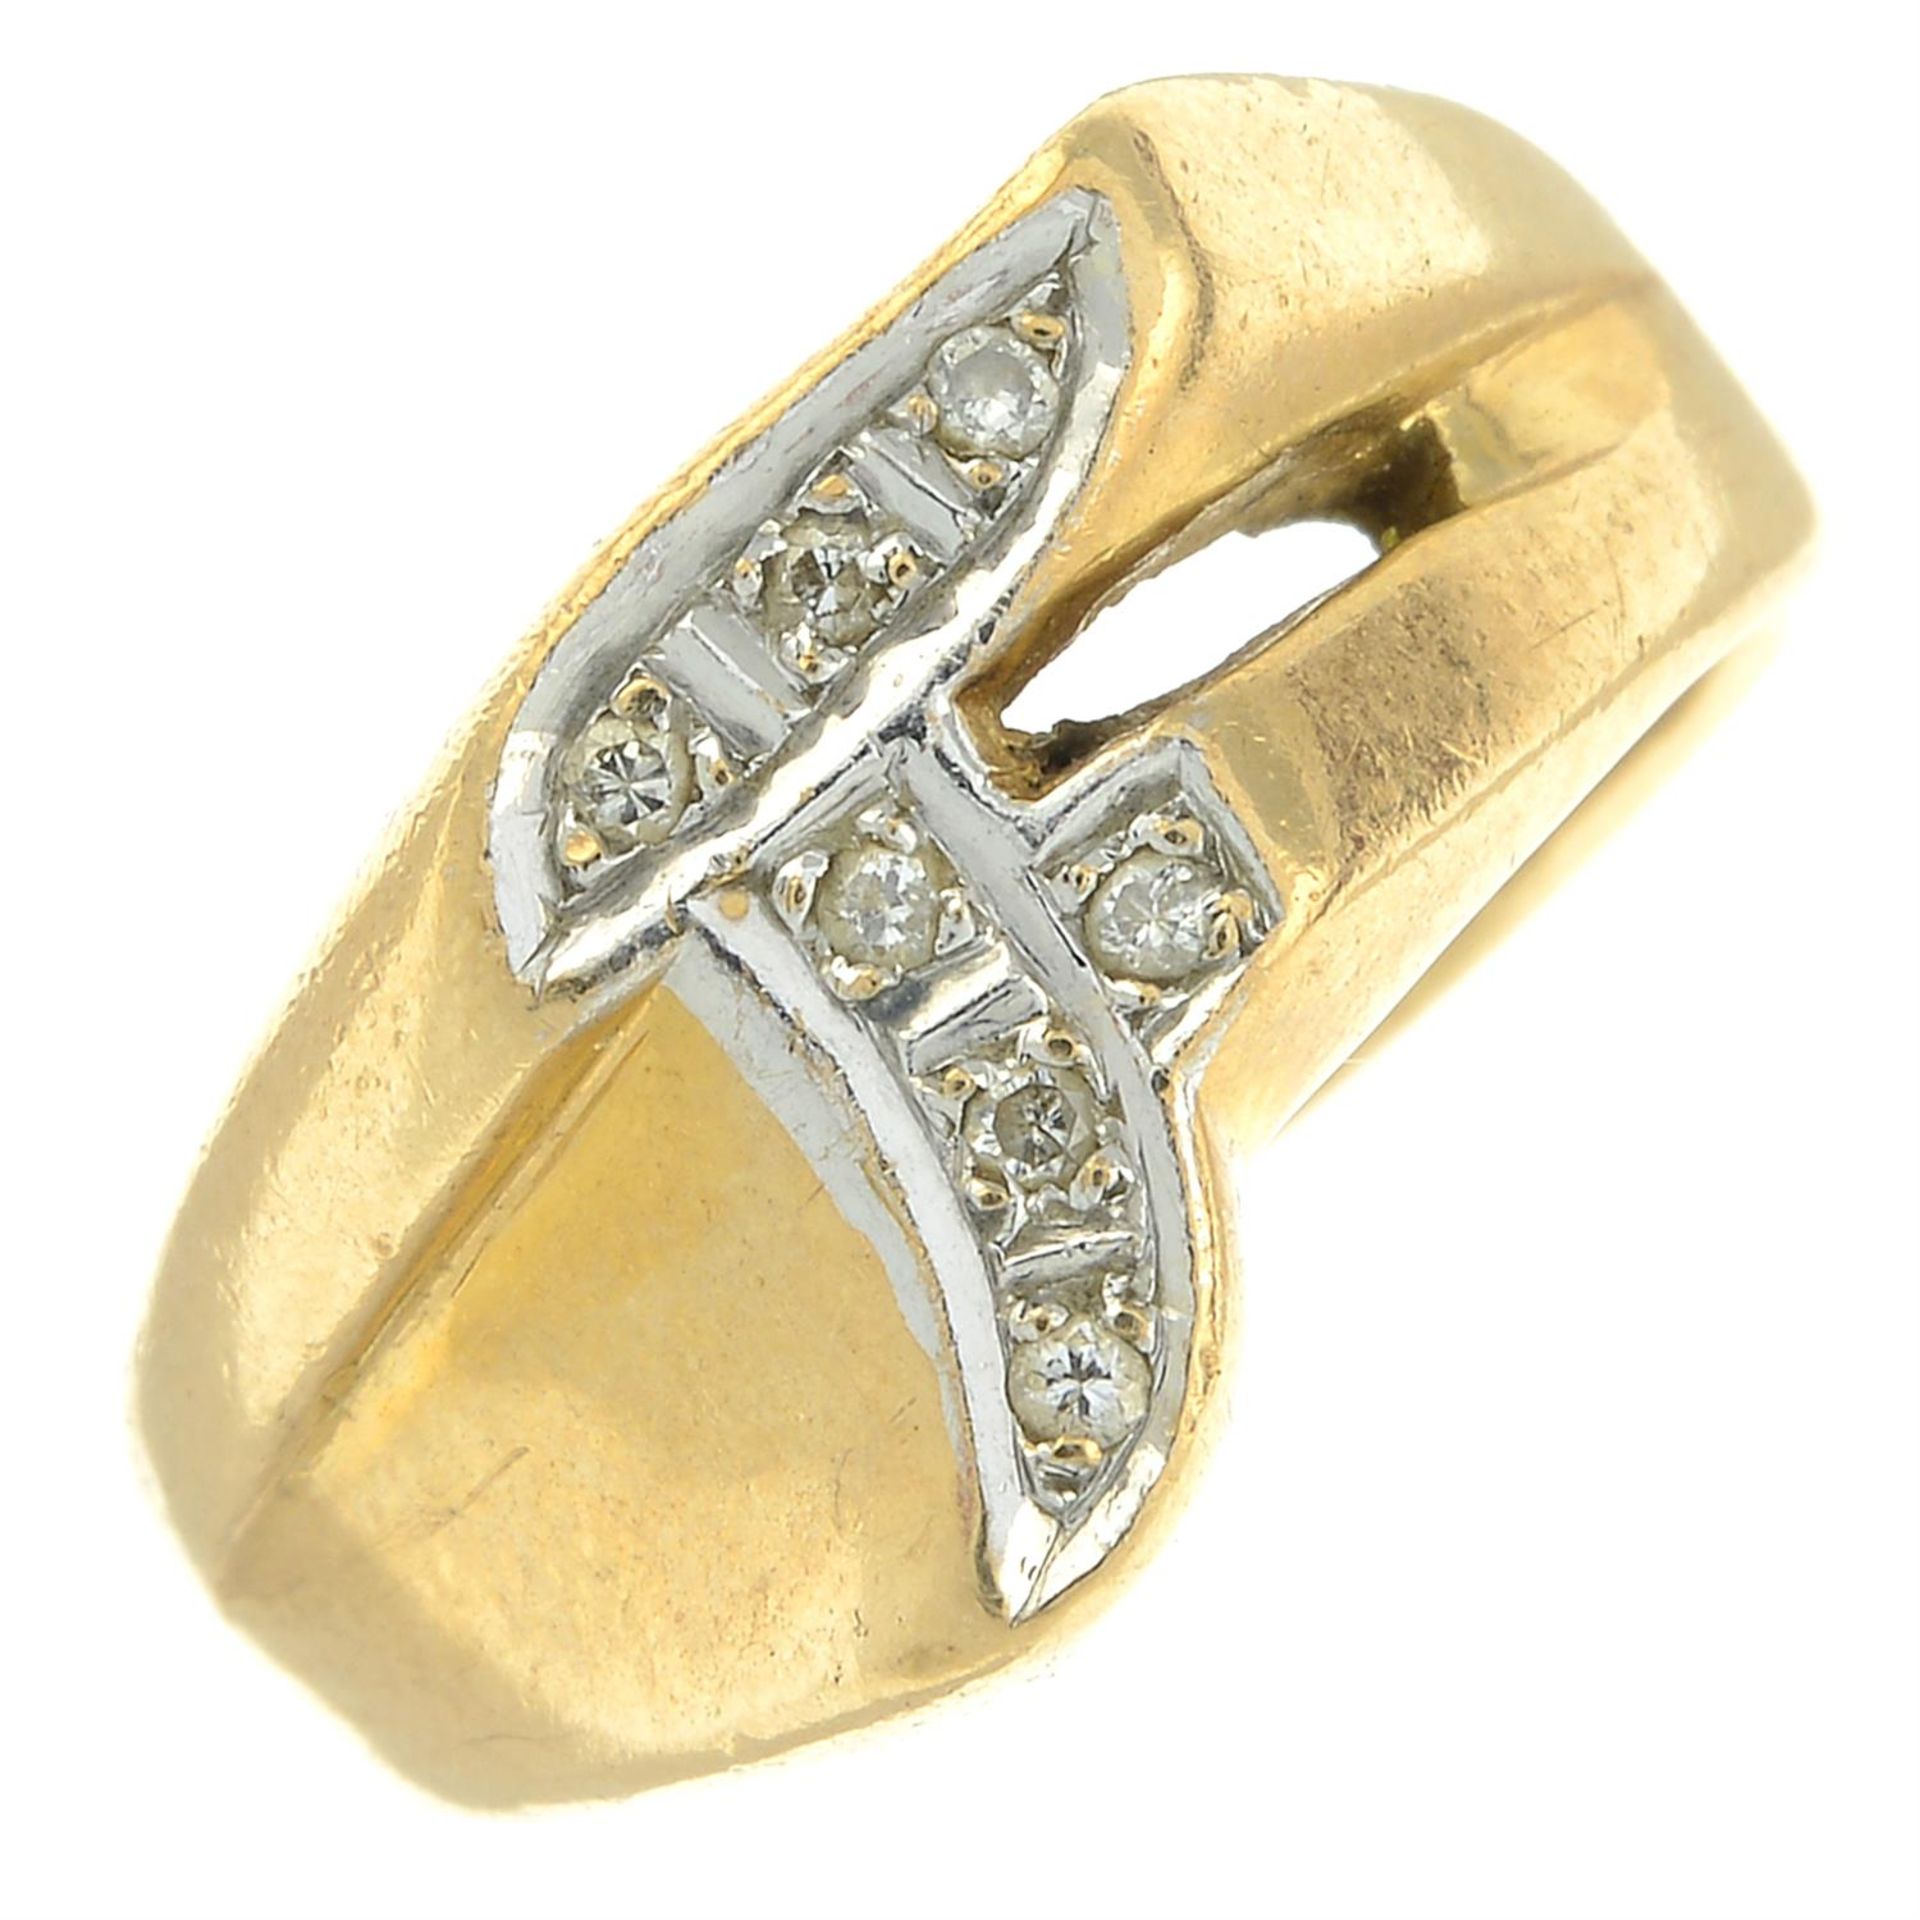 A single-cut diamond initial 'F' ring.